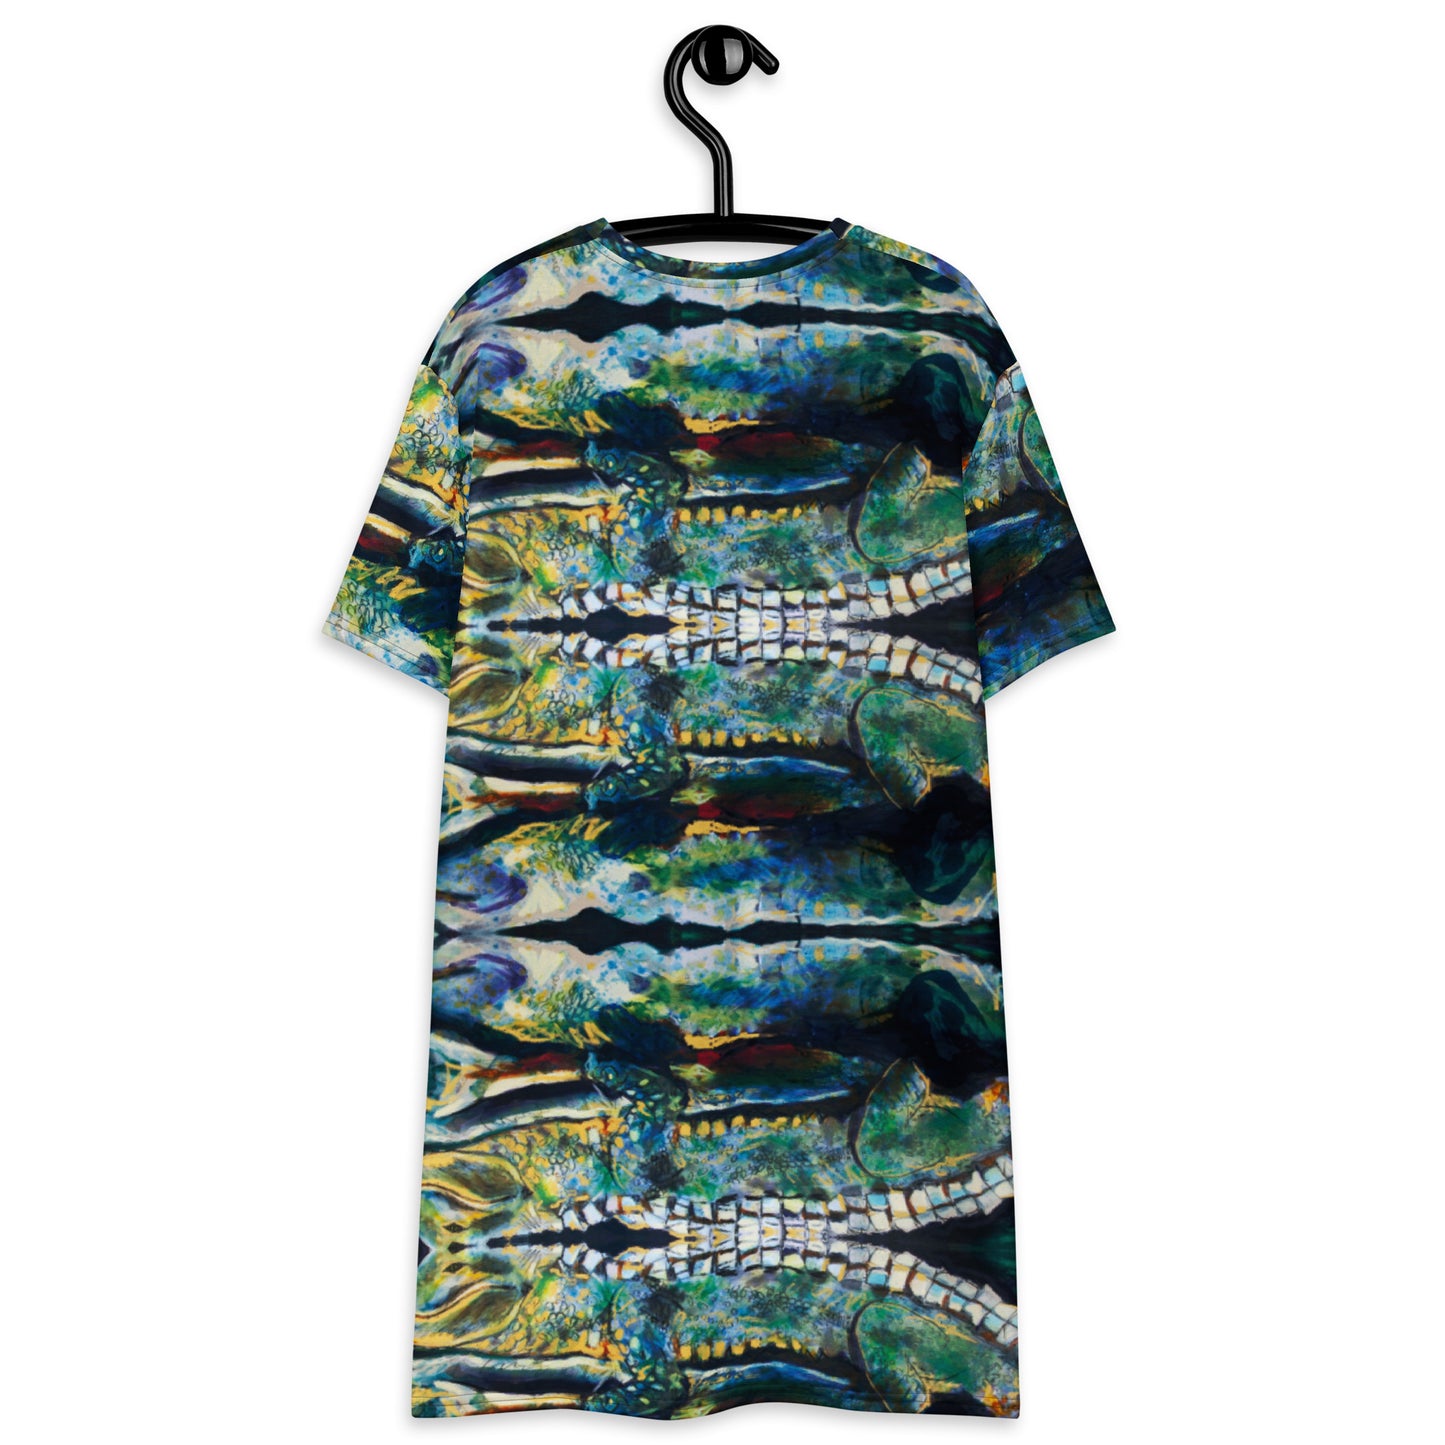 Psychedelic Gator T-shirt dress